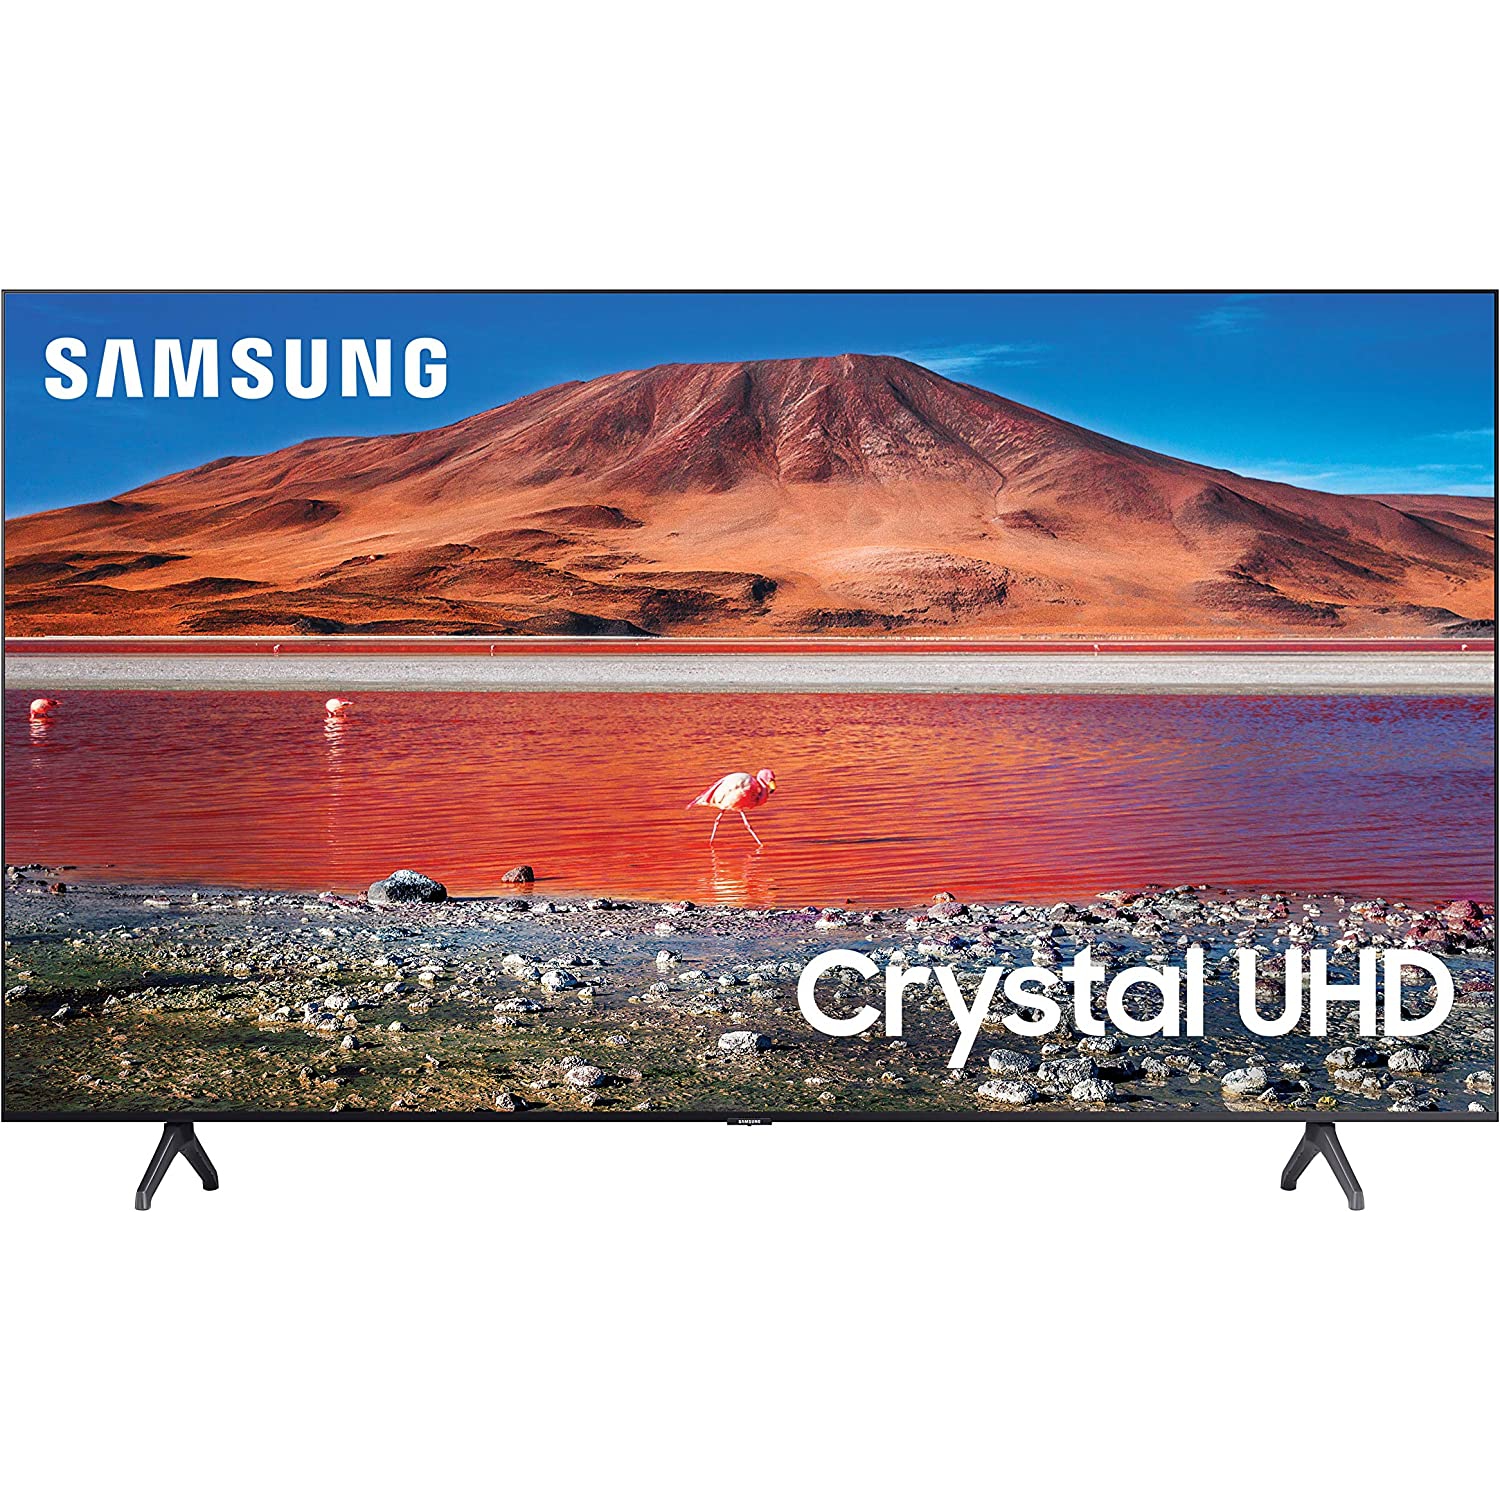 Samsung 55" 4K UHD HDR LED Tizen Smart TV (UN55TU7000FXZC) - Titan Grey OPEN BOX with One Year DC Canada Warranty